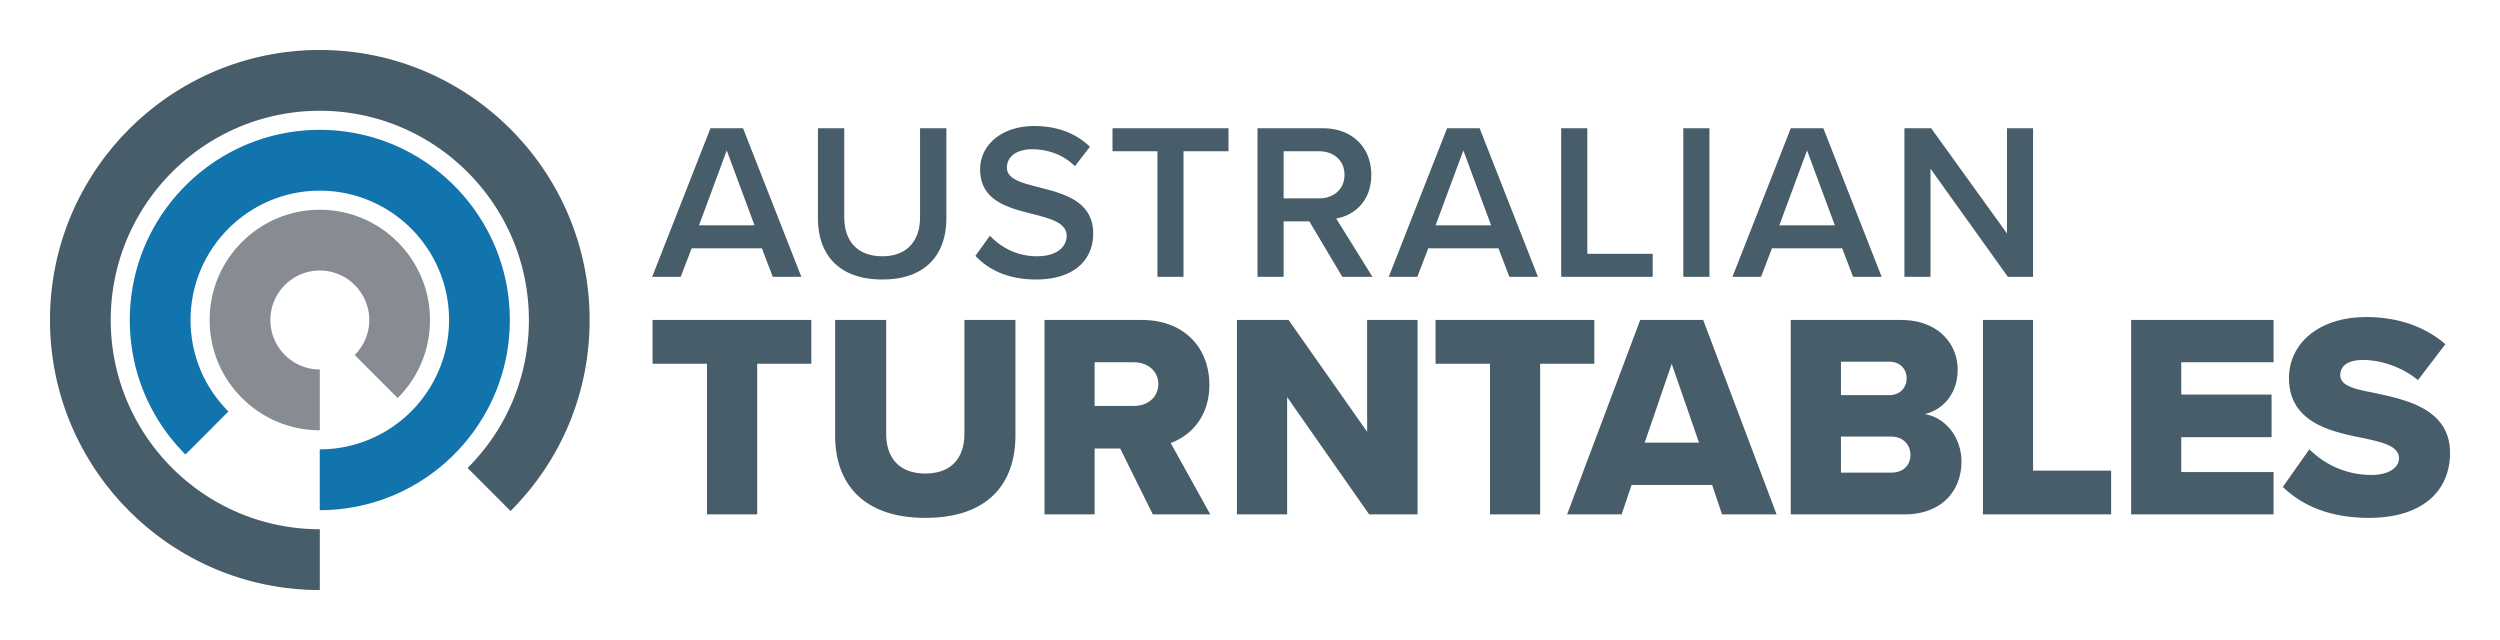 Australian Turntable